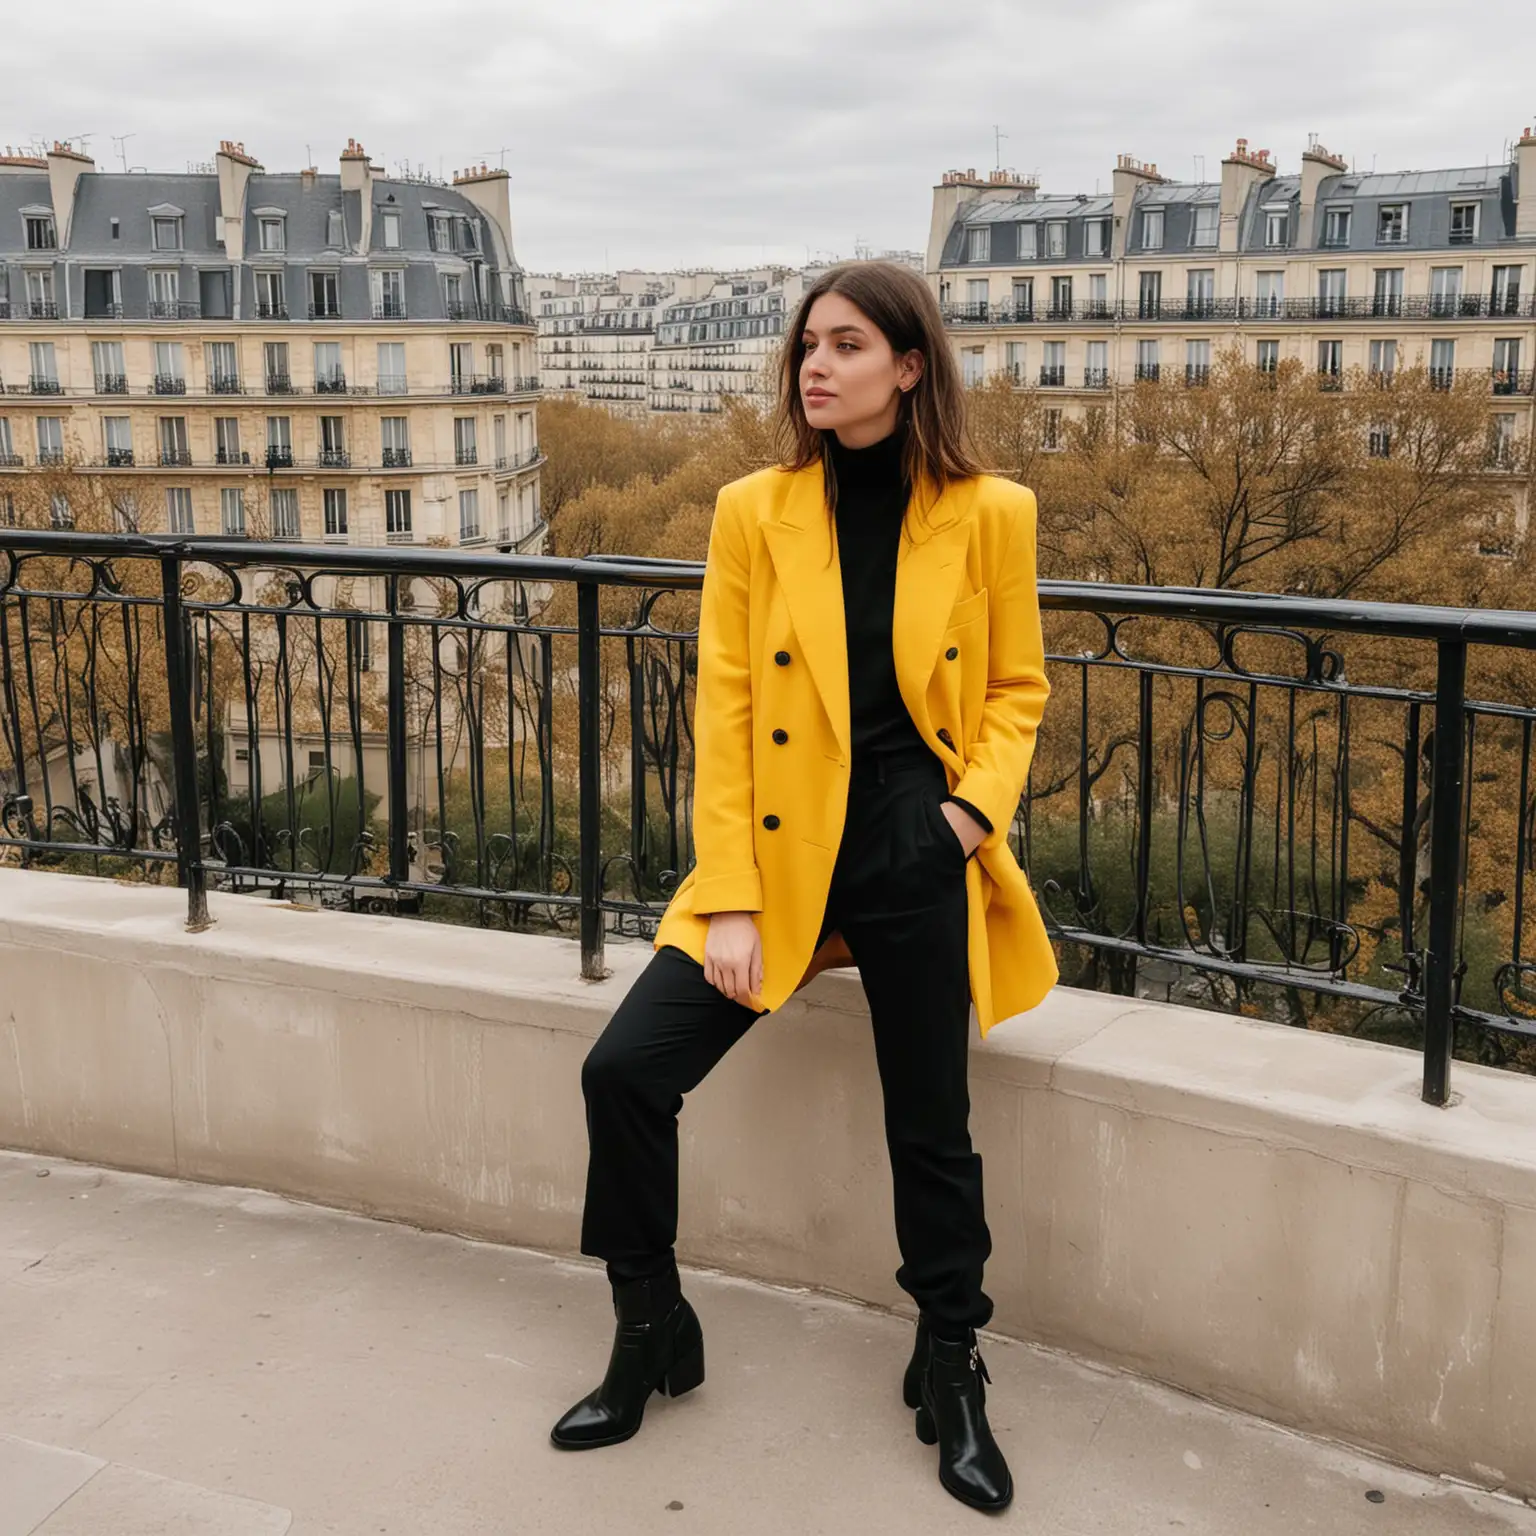 Stylish Woman in Yellow Oversize Blazer against Parisian Backdrop